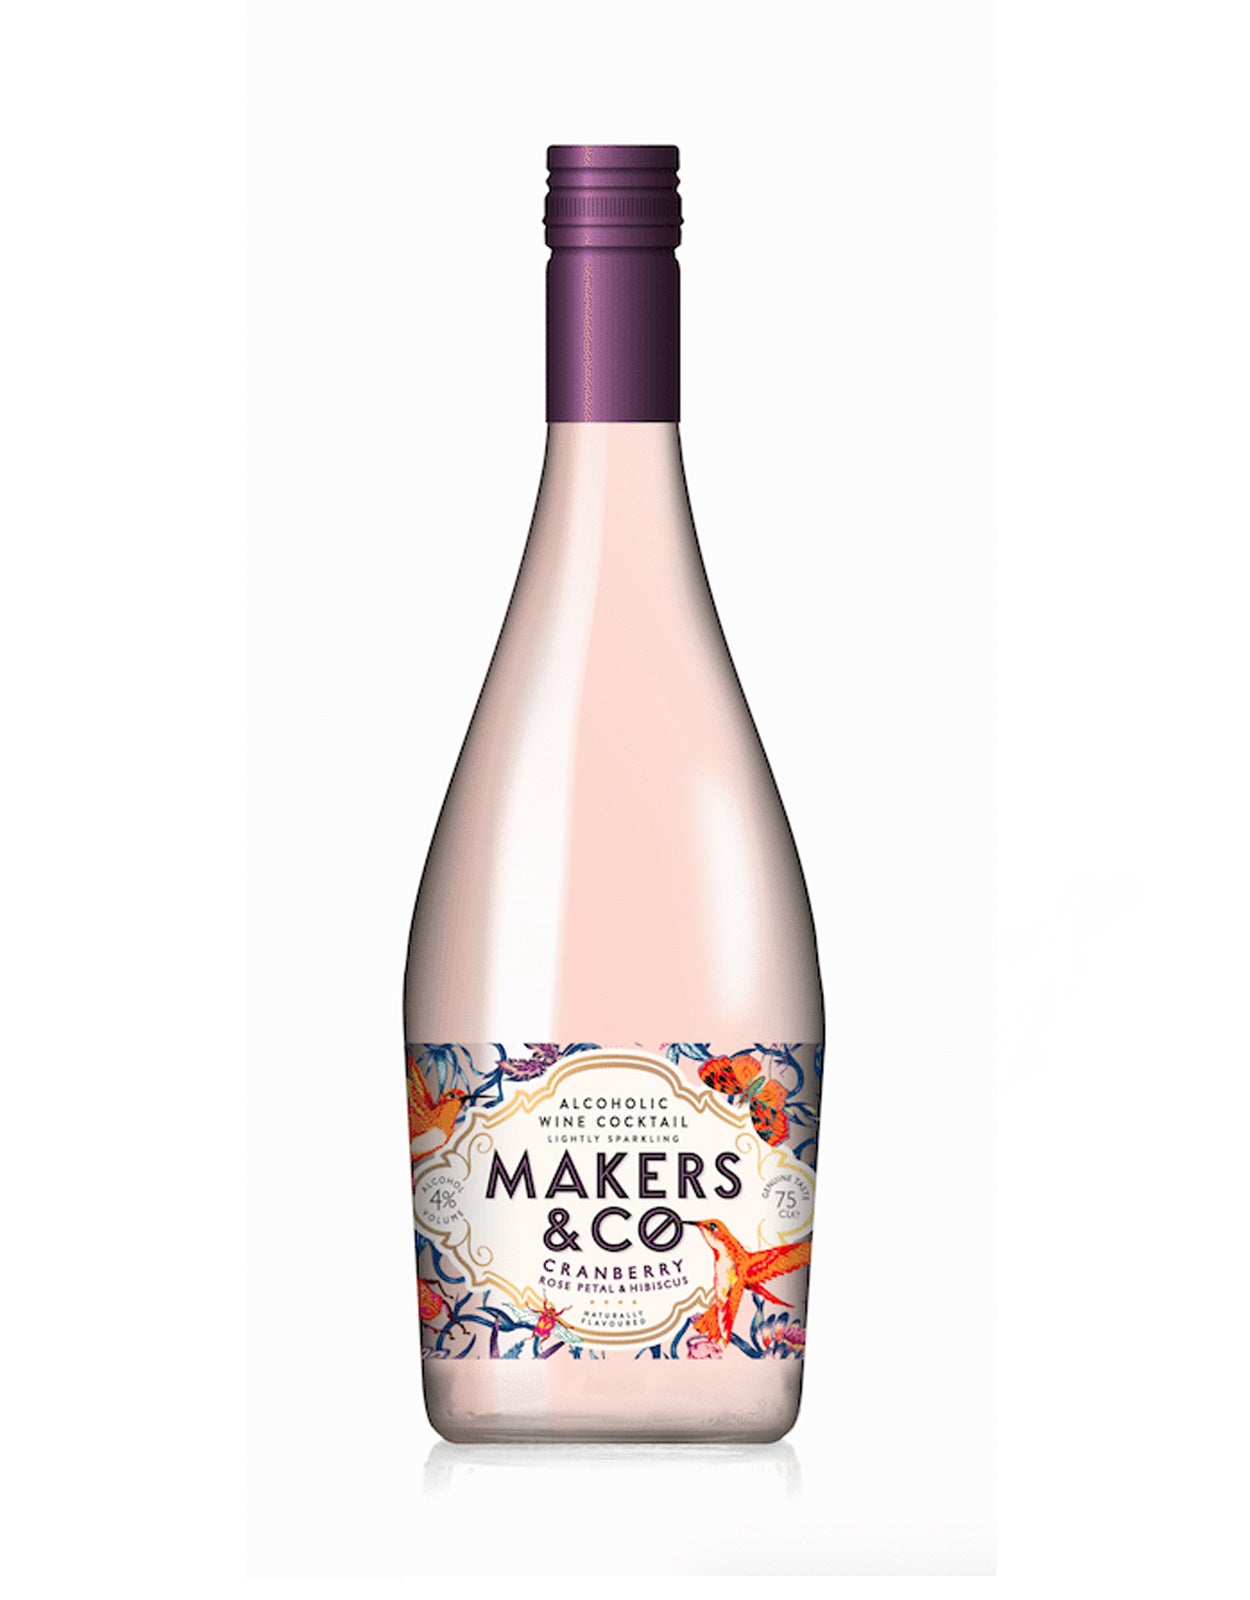 Makers & Co Cranberry Rose Petal Hibiscus